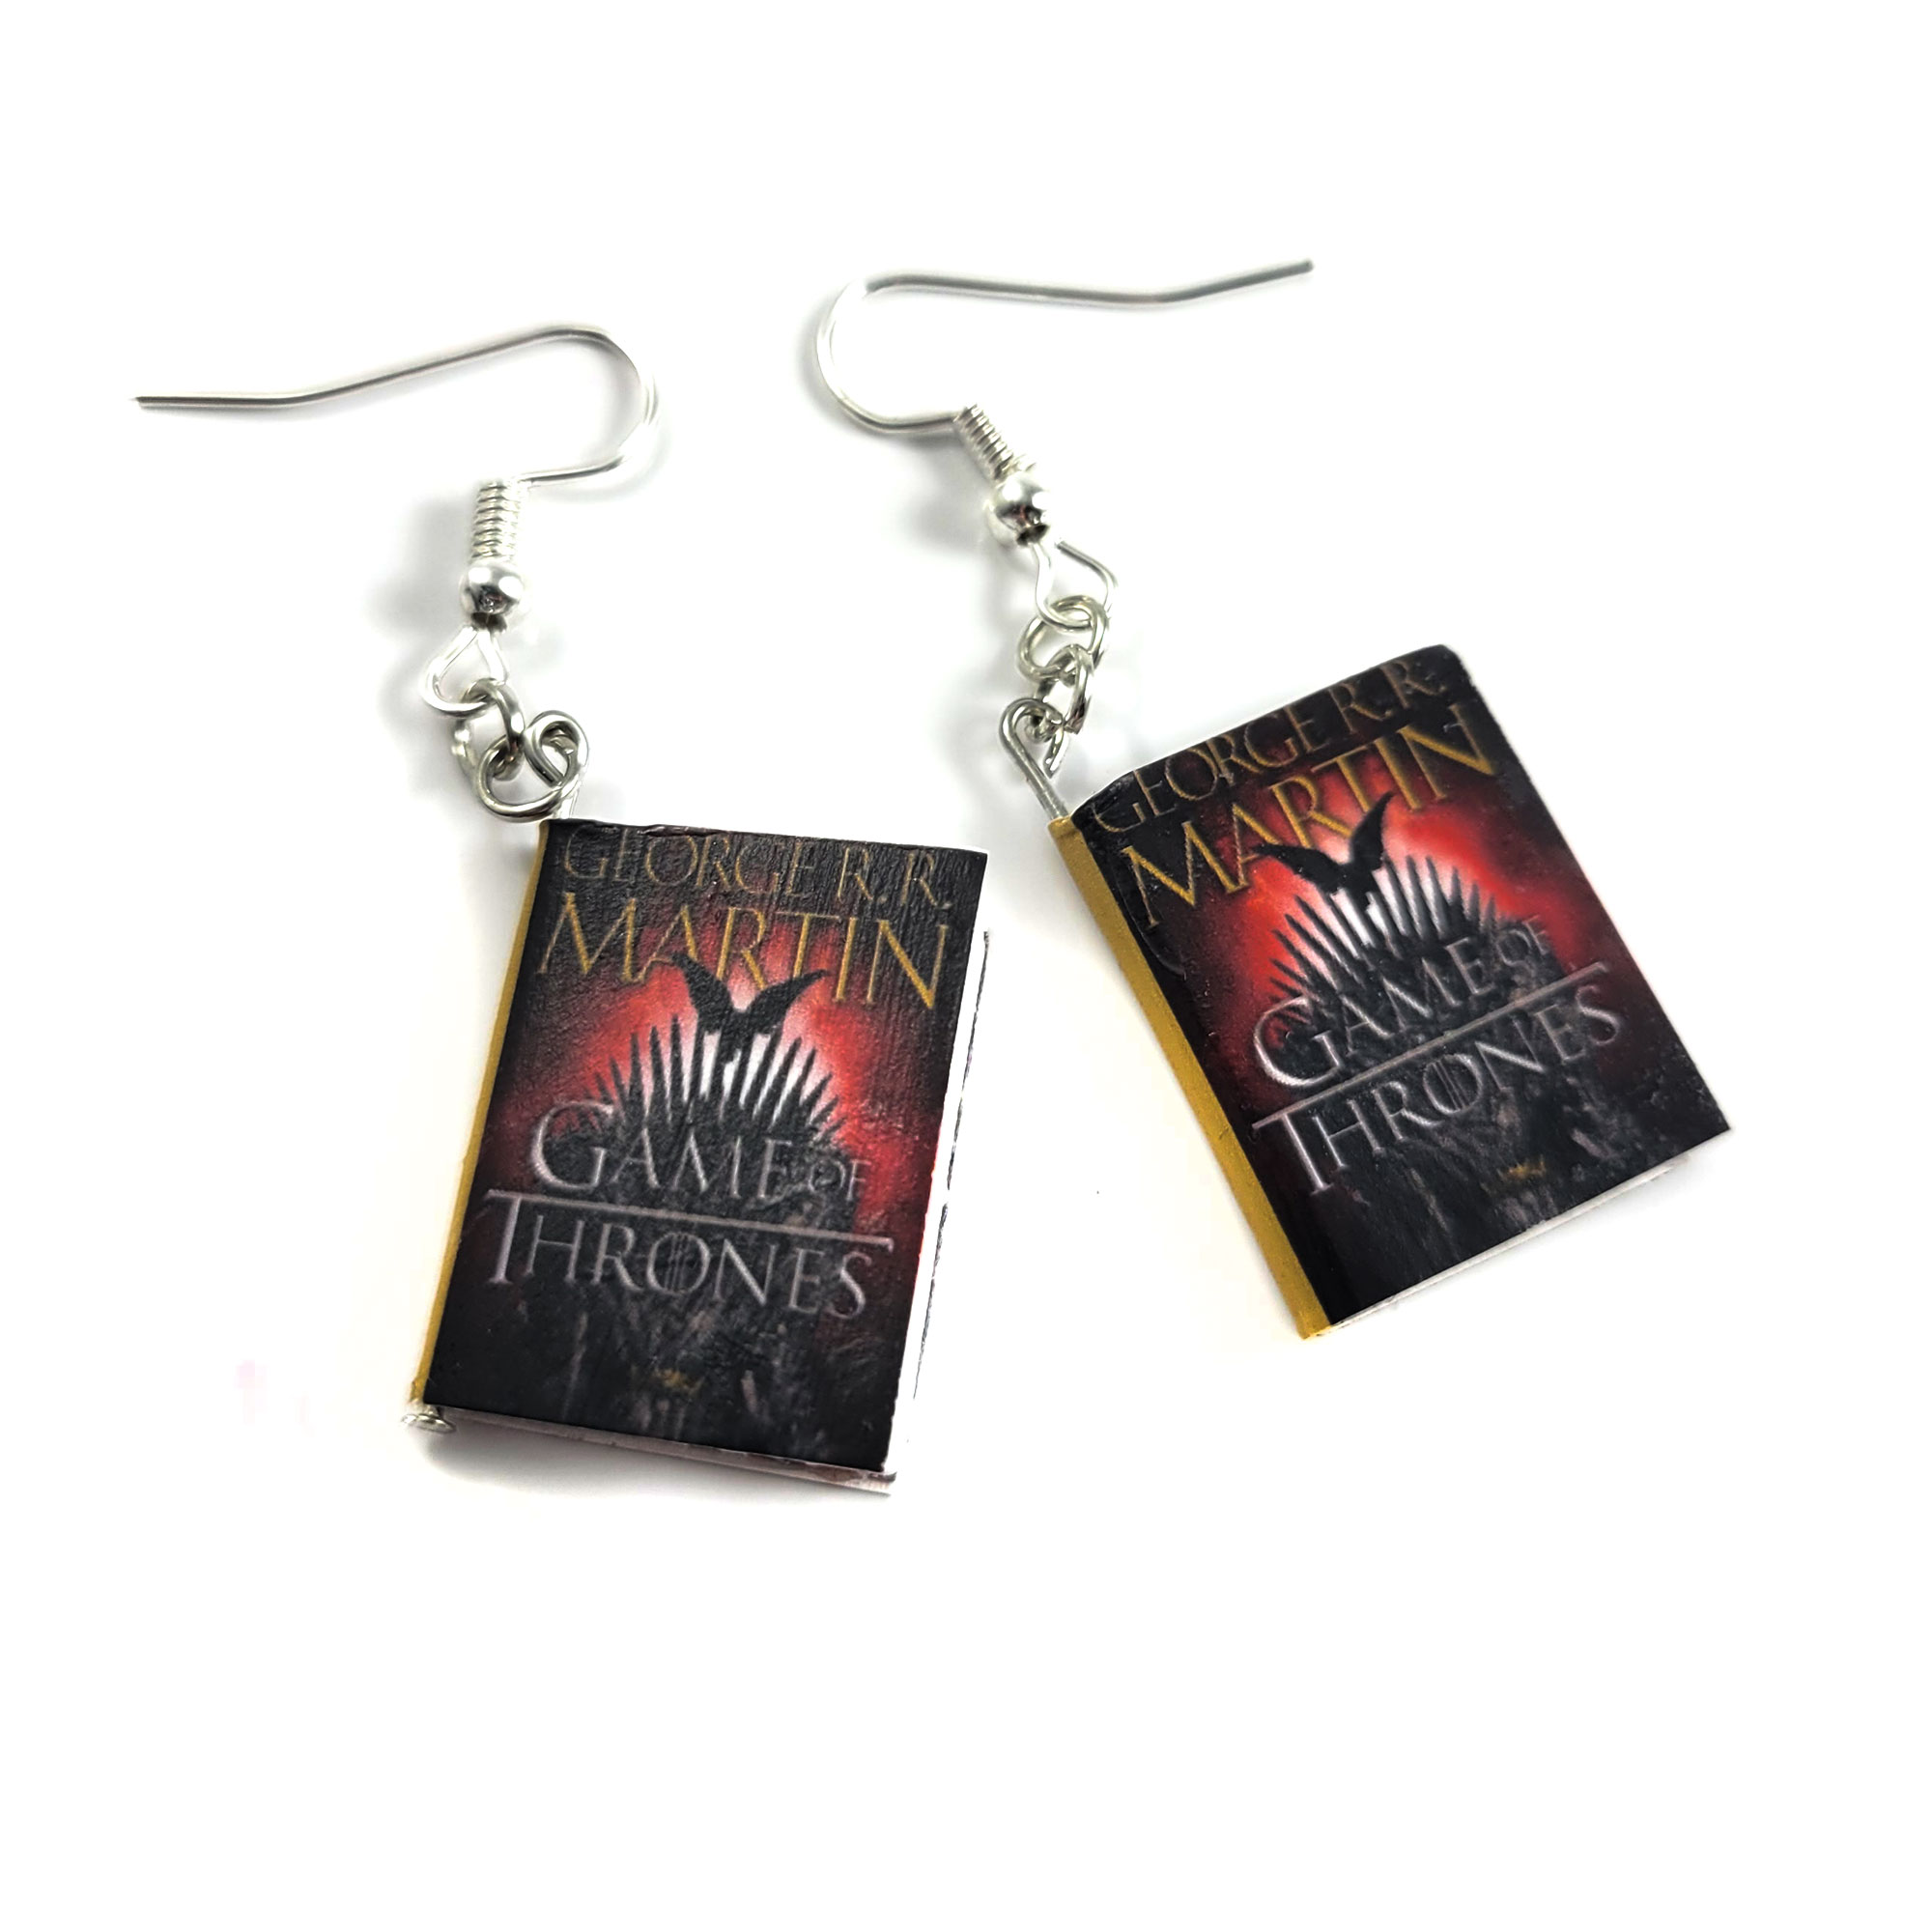 Game of Thrones Literature Lover Book Earrings by Wilde Designs